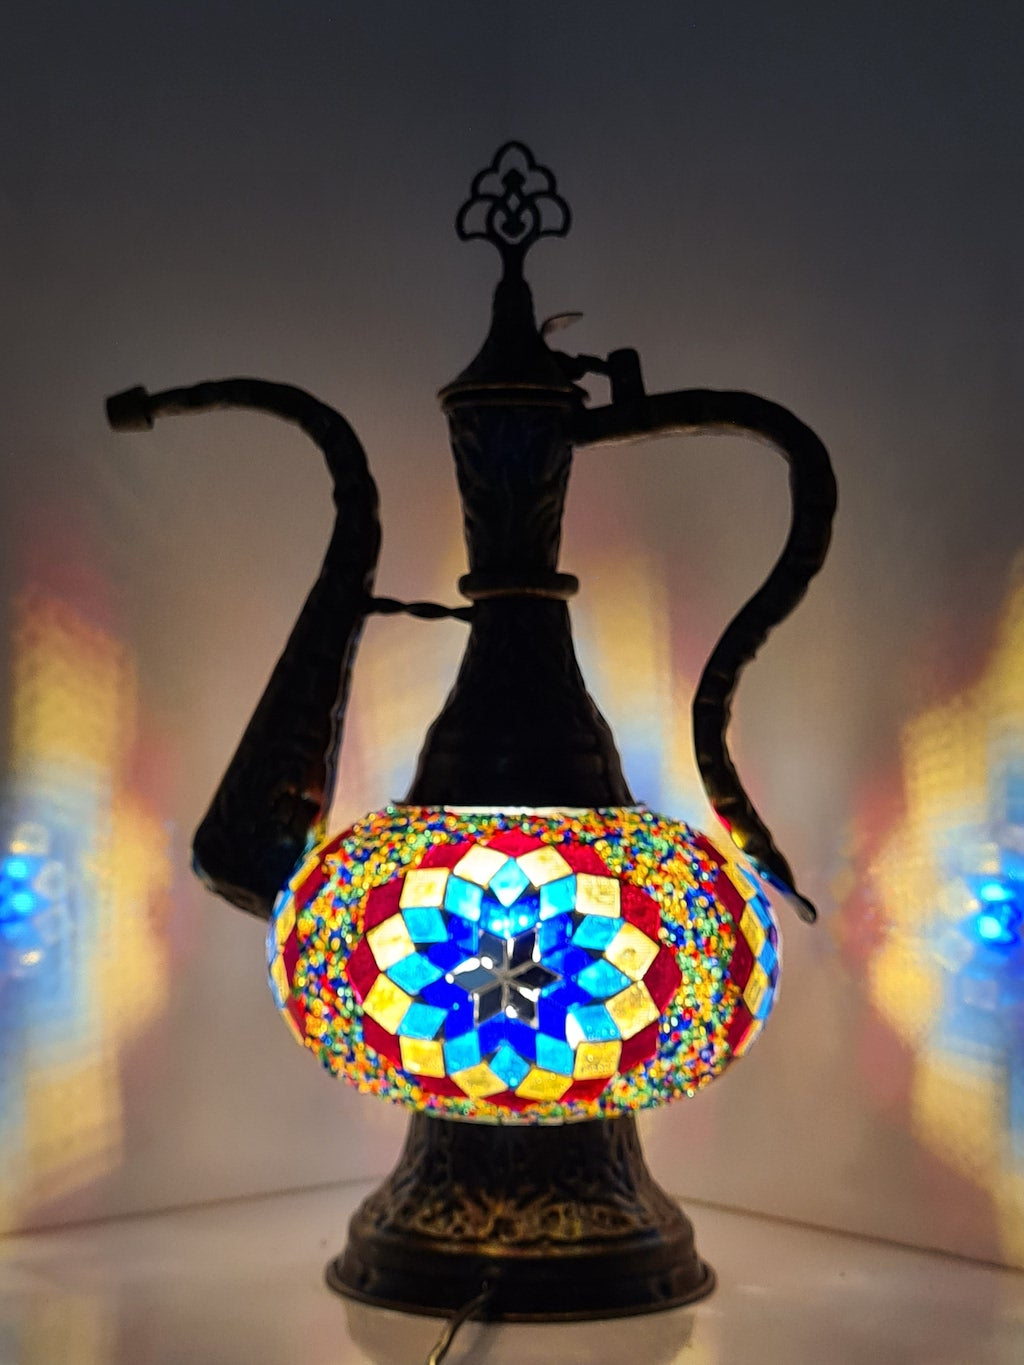 Medium - Pitcher IBRIK Mosaic Glass Lamp with Brass Table Top